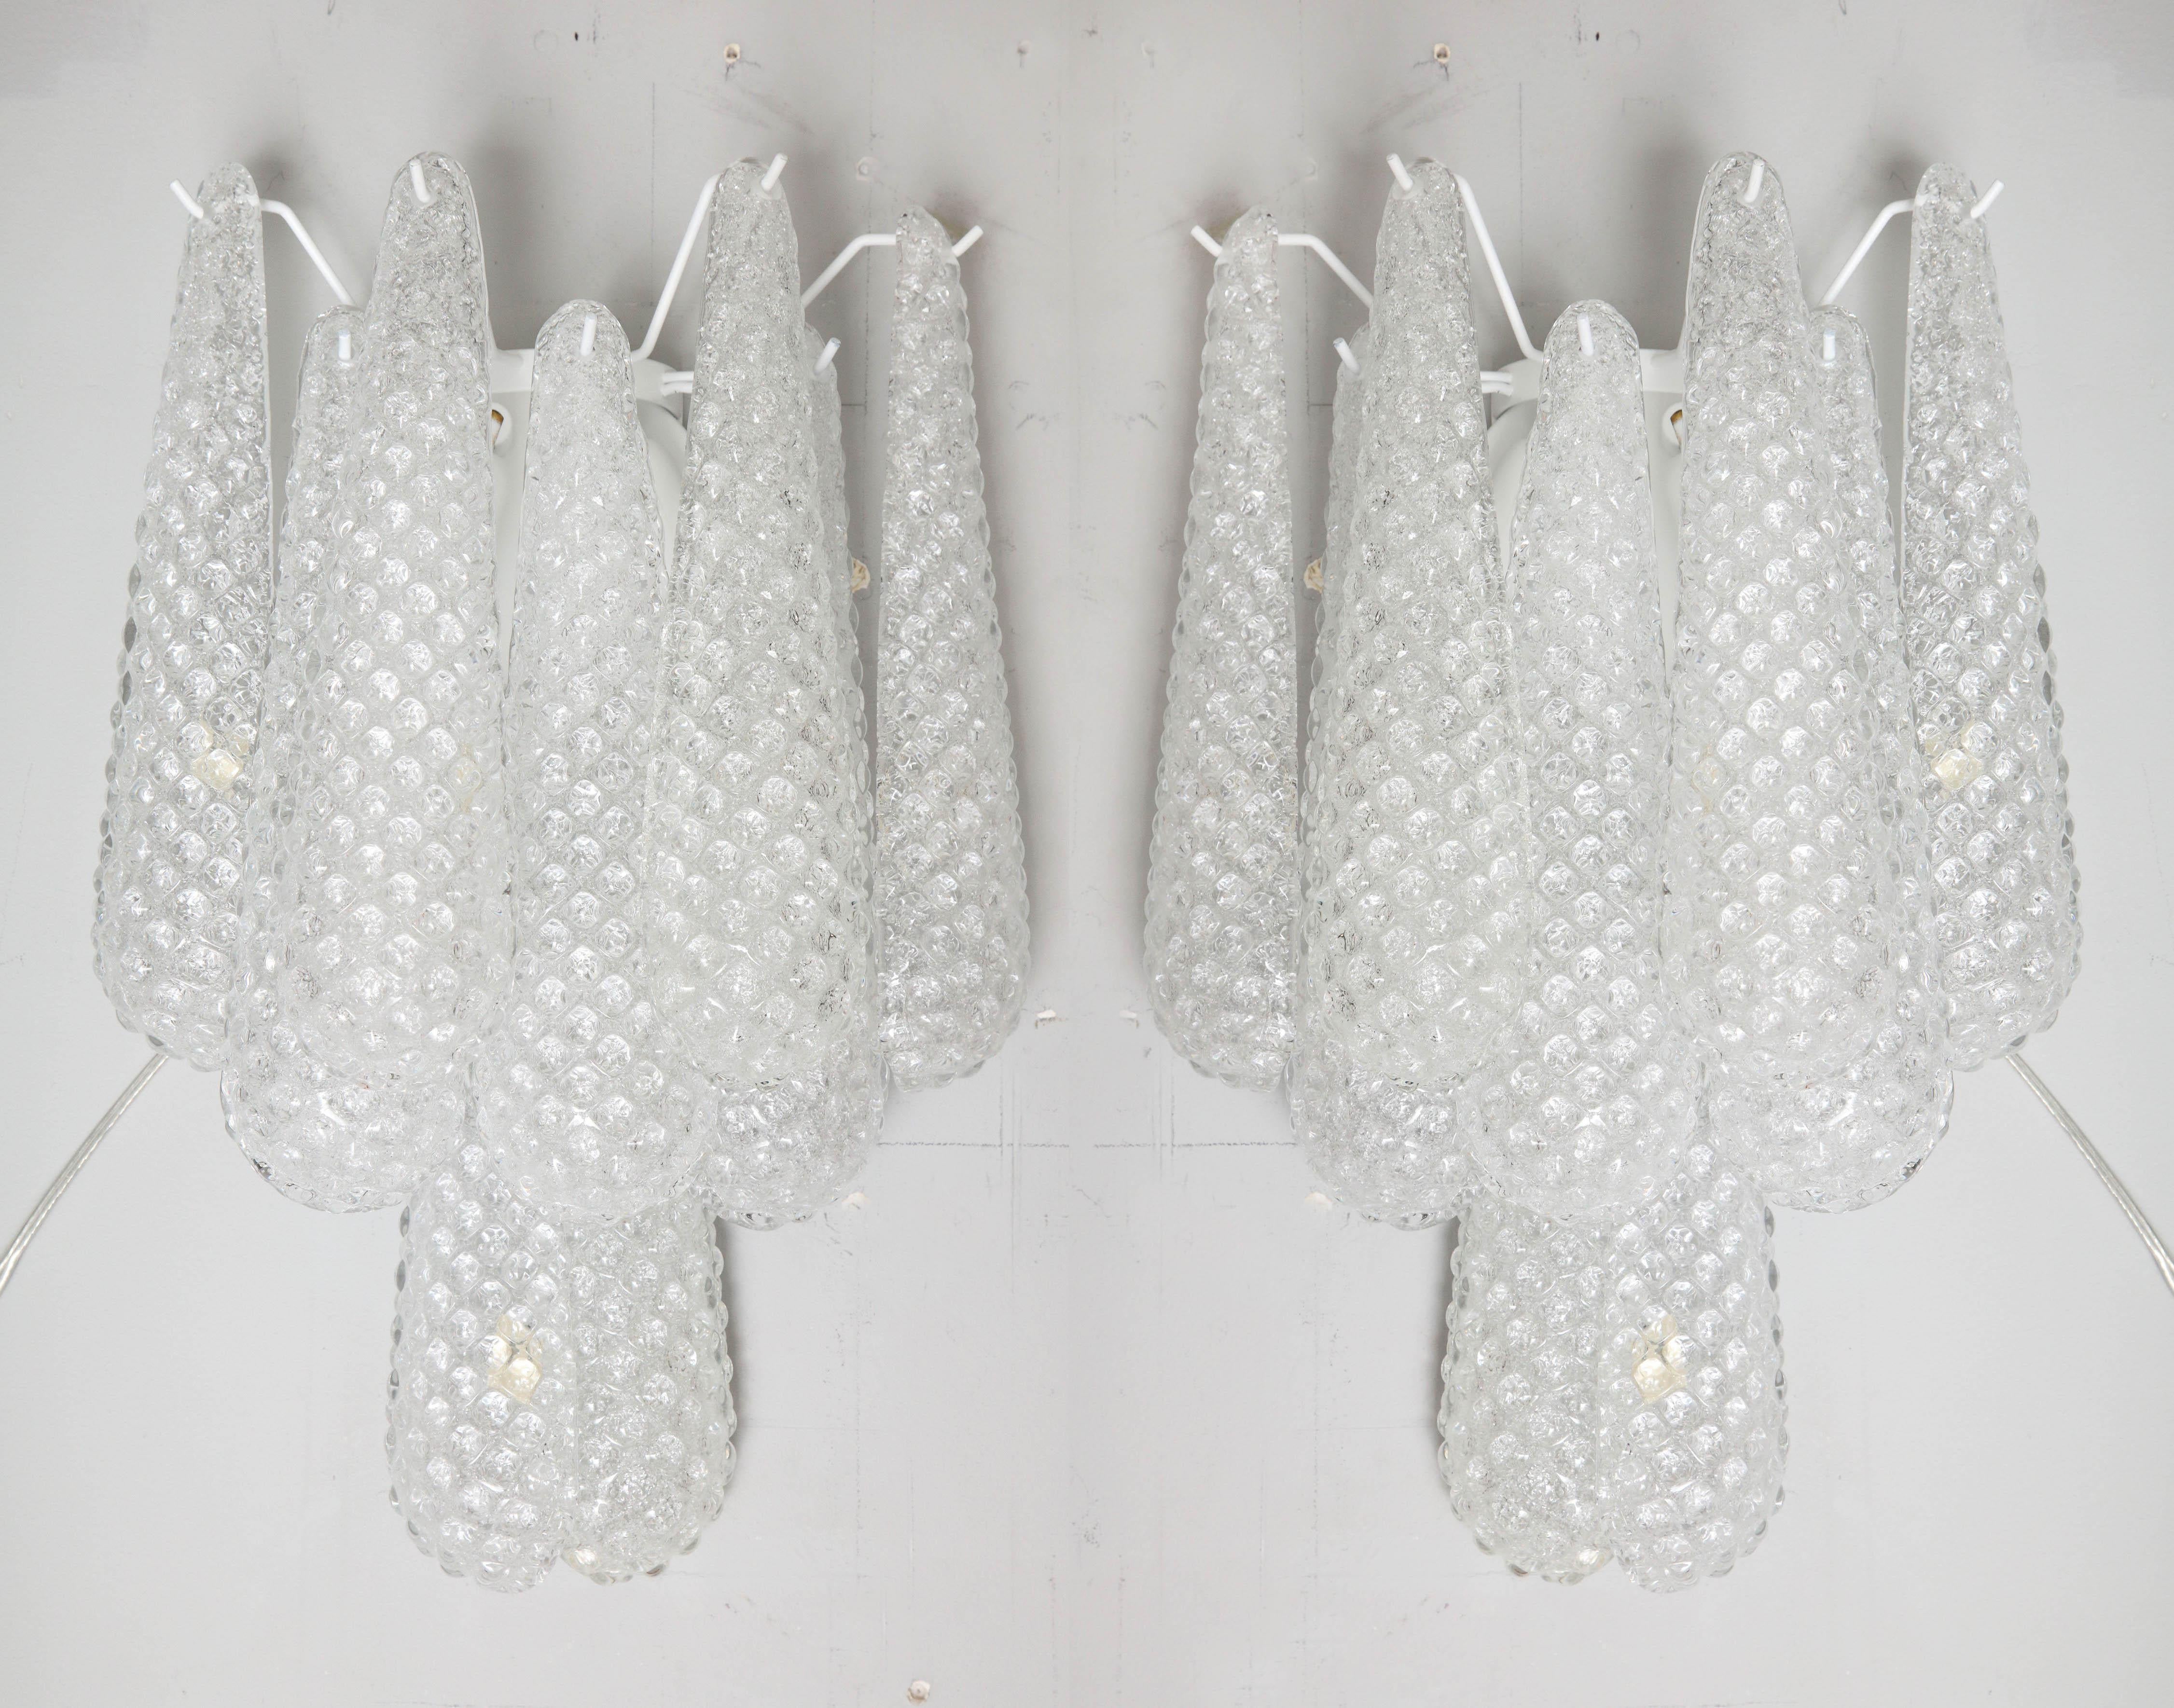 Pair of custom Murano honeycomb glass sconces - 9 pieces of glass.